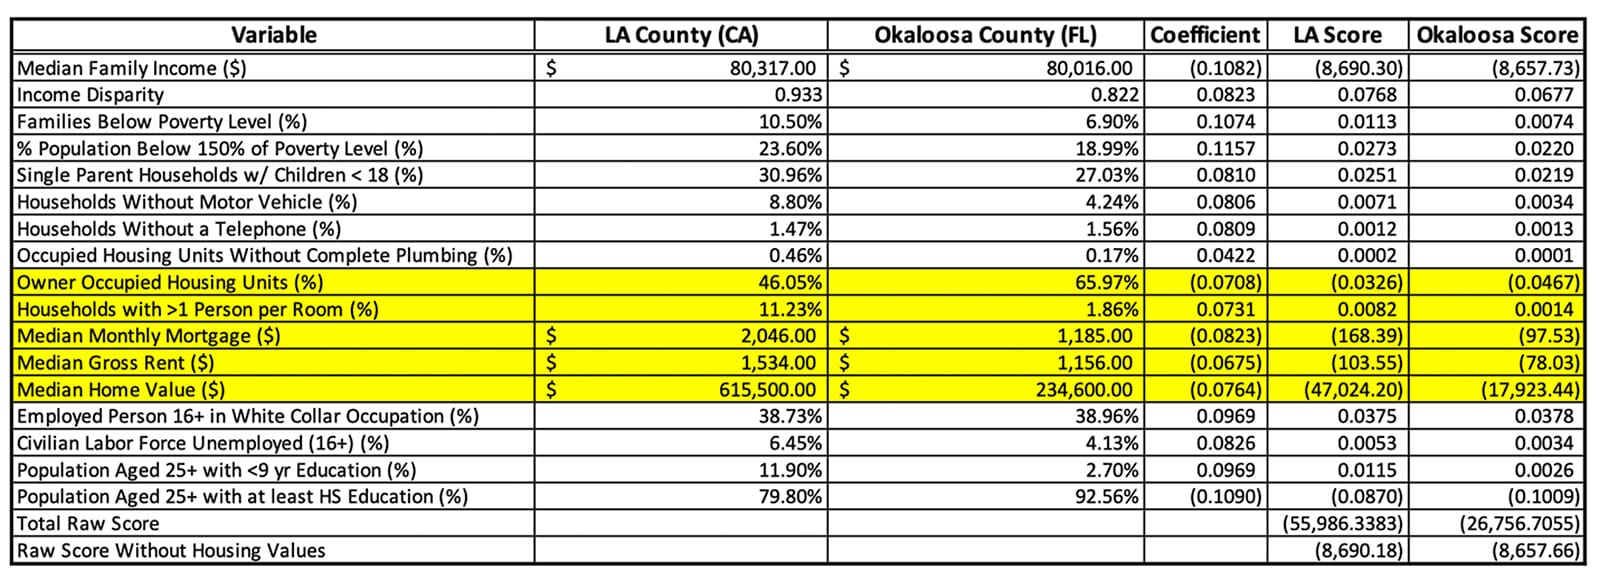 Census Variables Comprising ADI Score for LA County and Okaloosa County